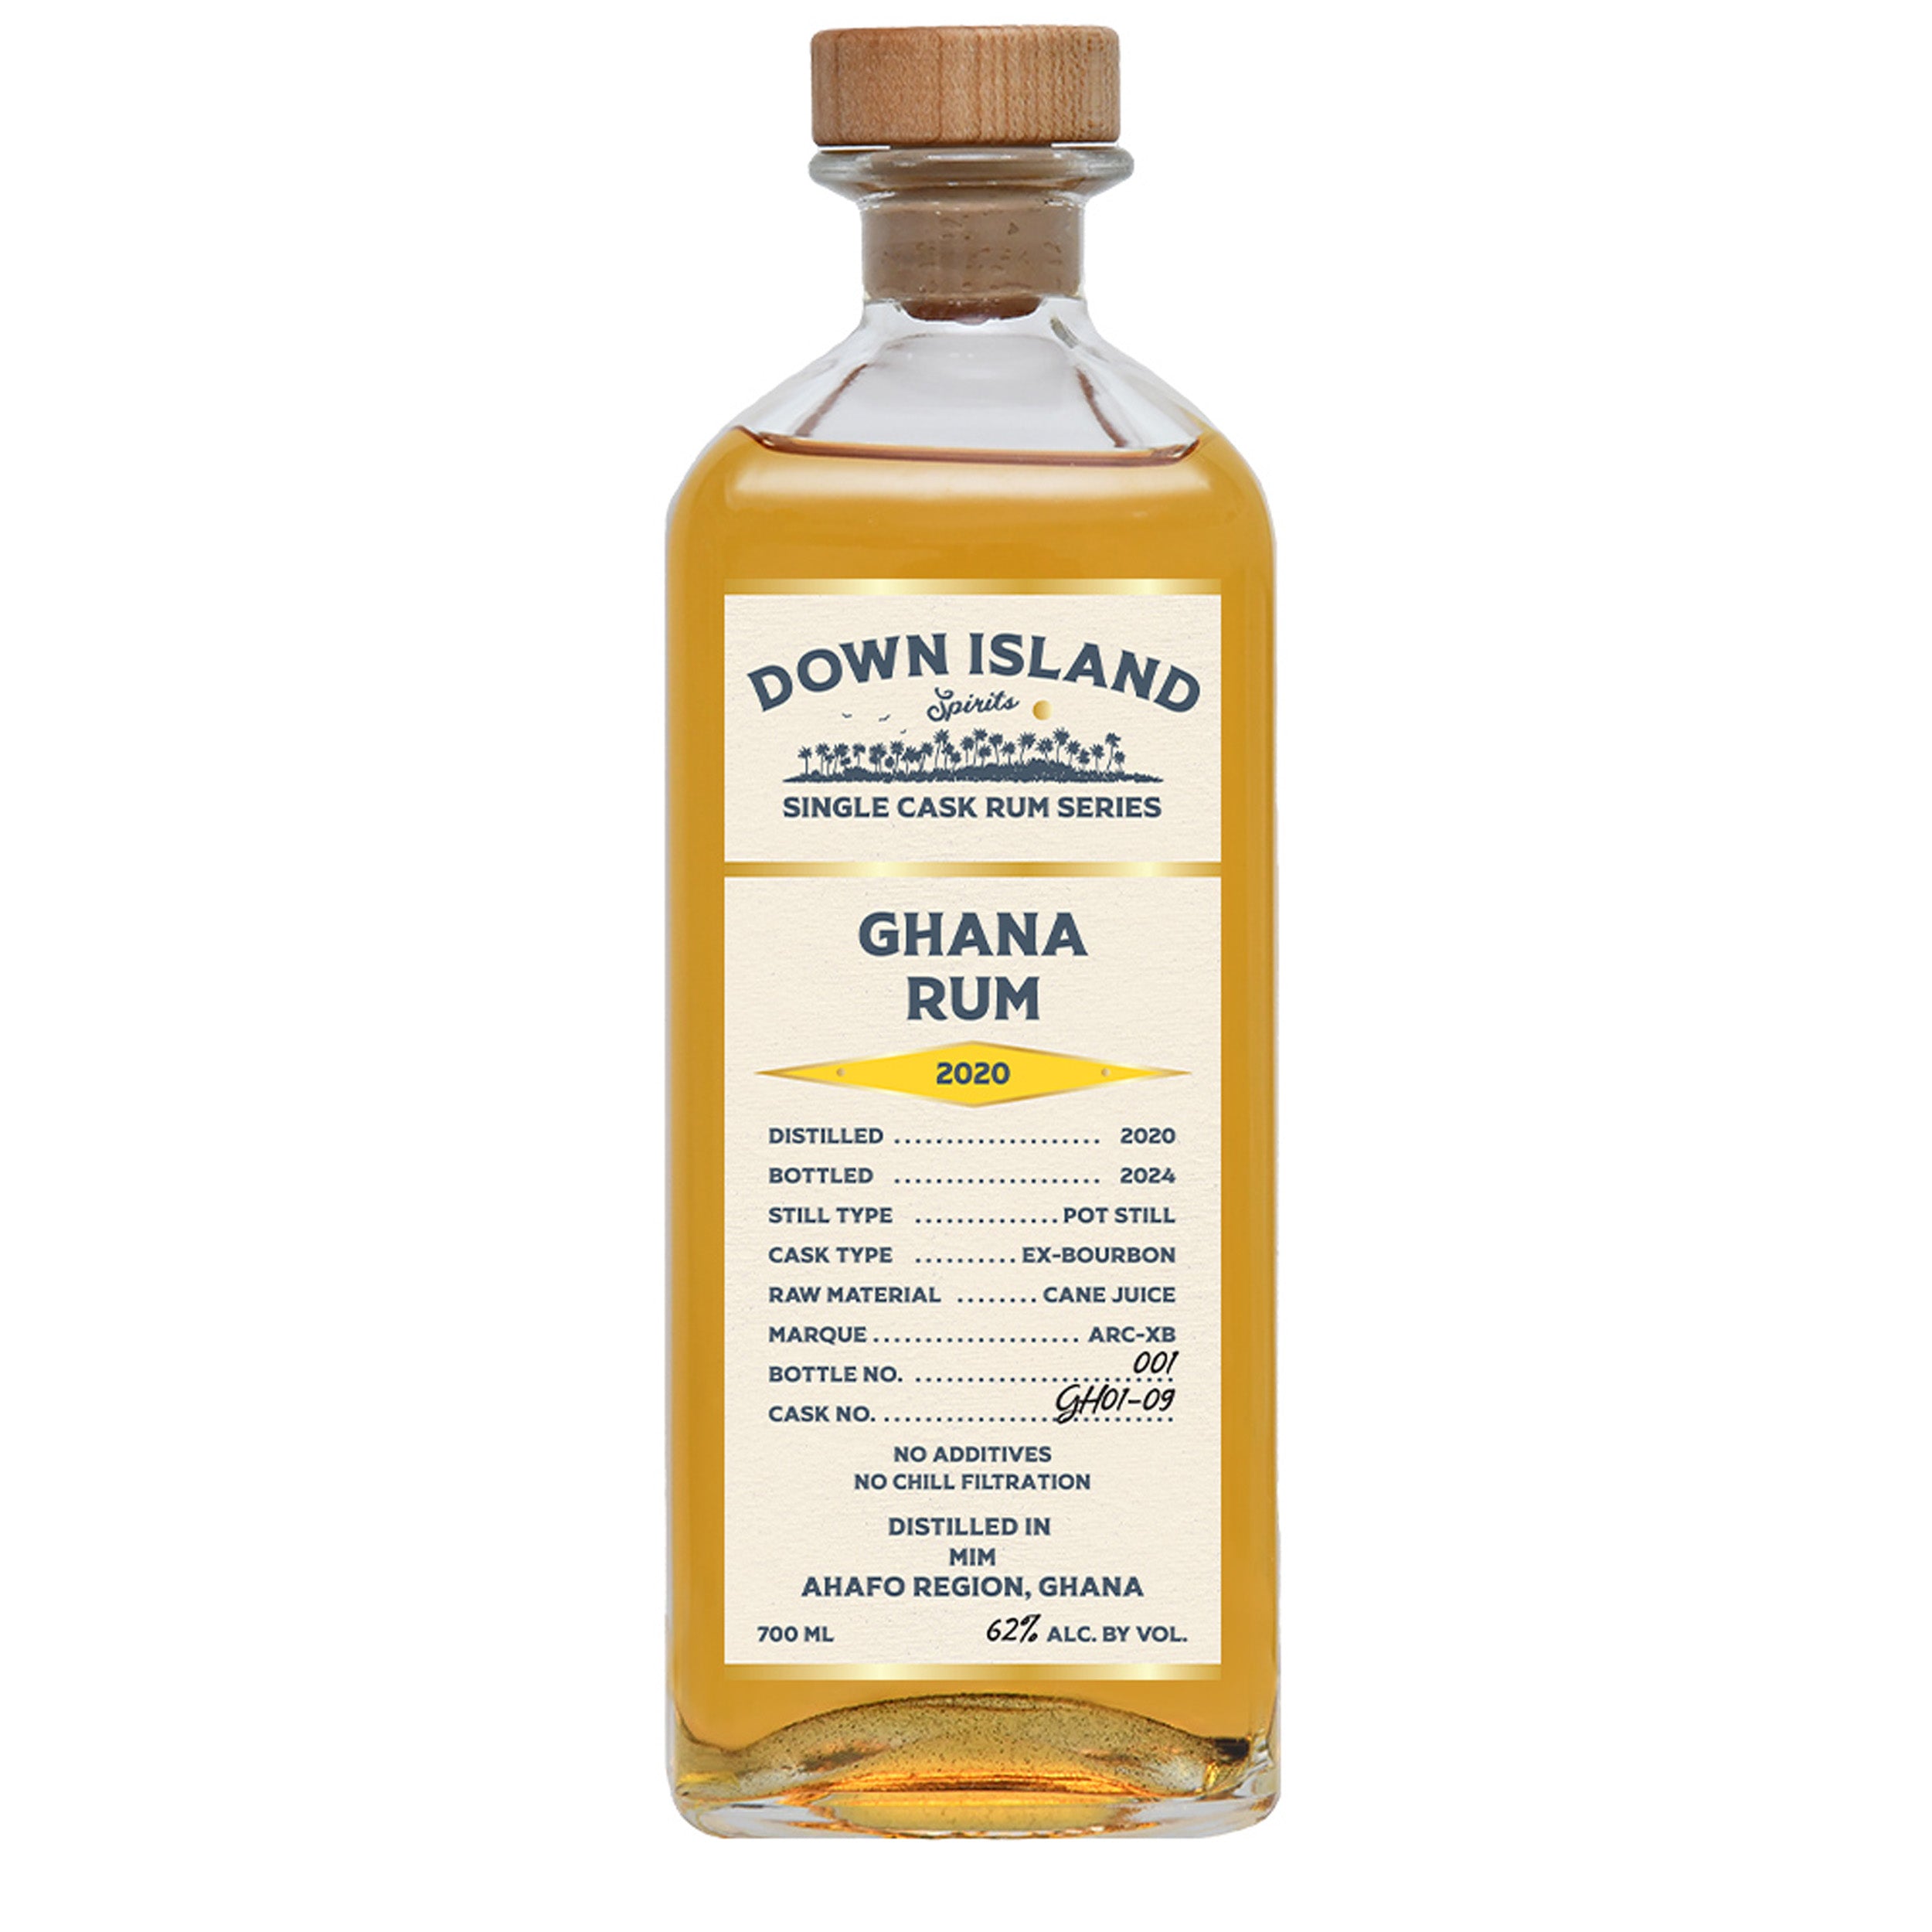 Down Island Spirits Ghana 2020 Rum